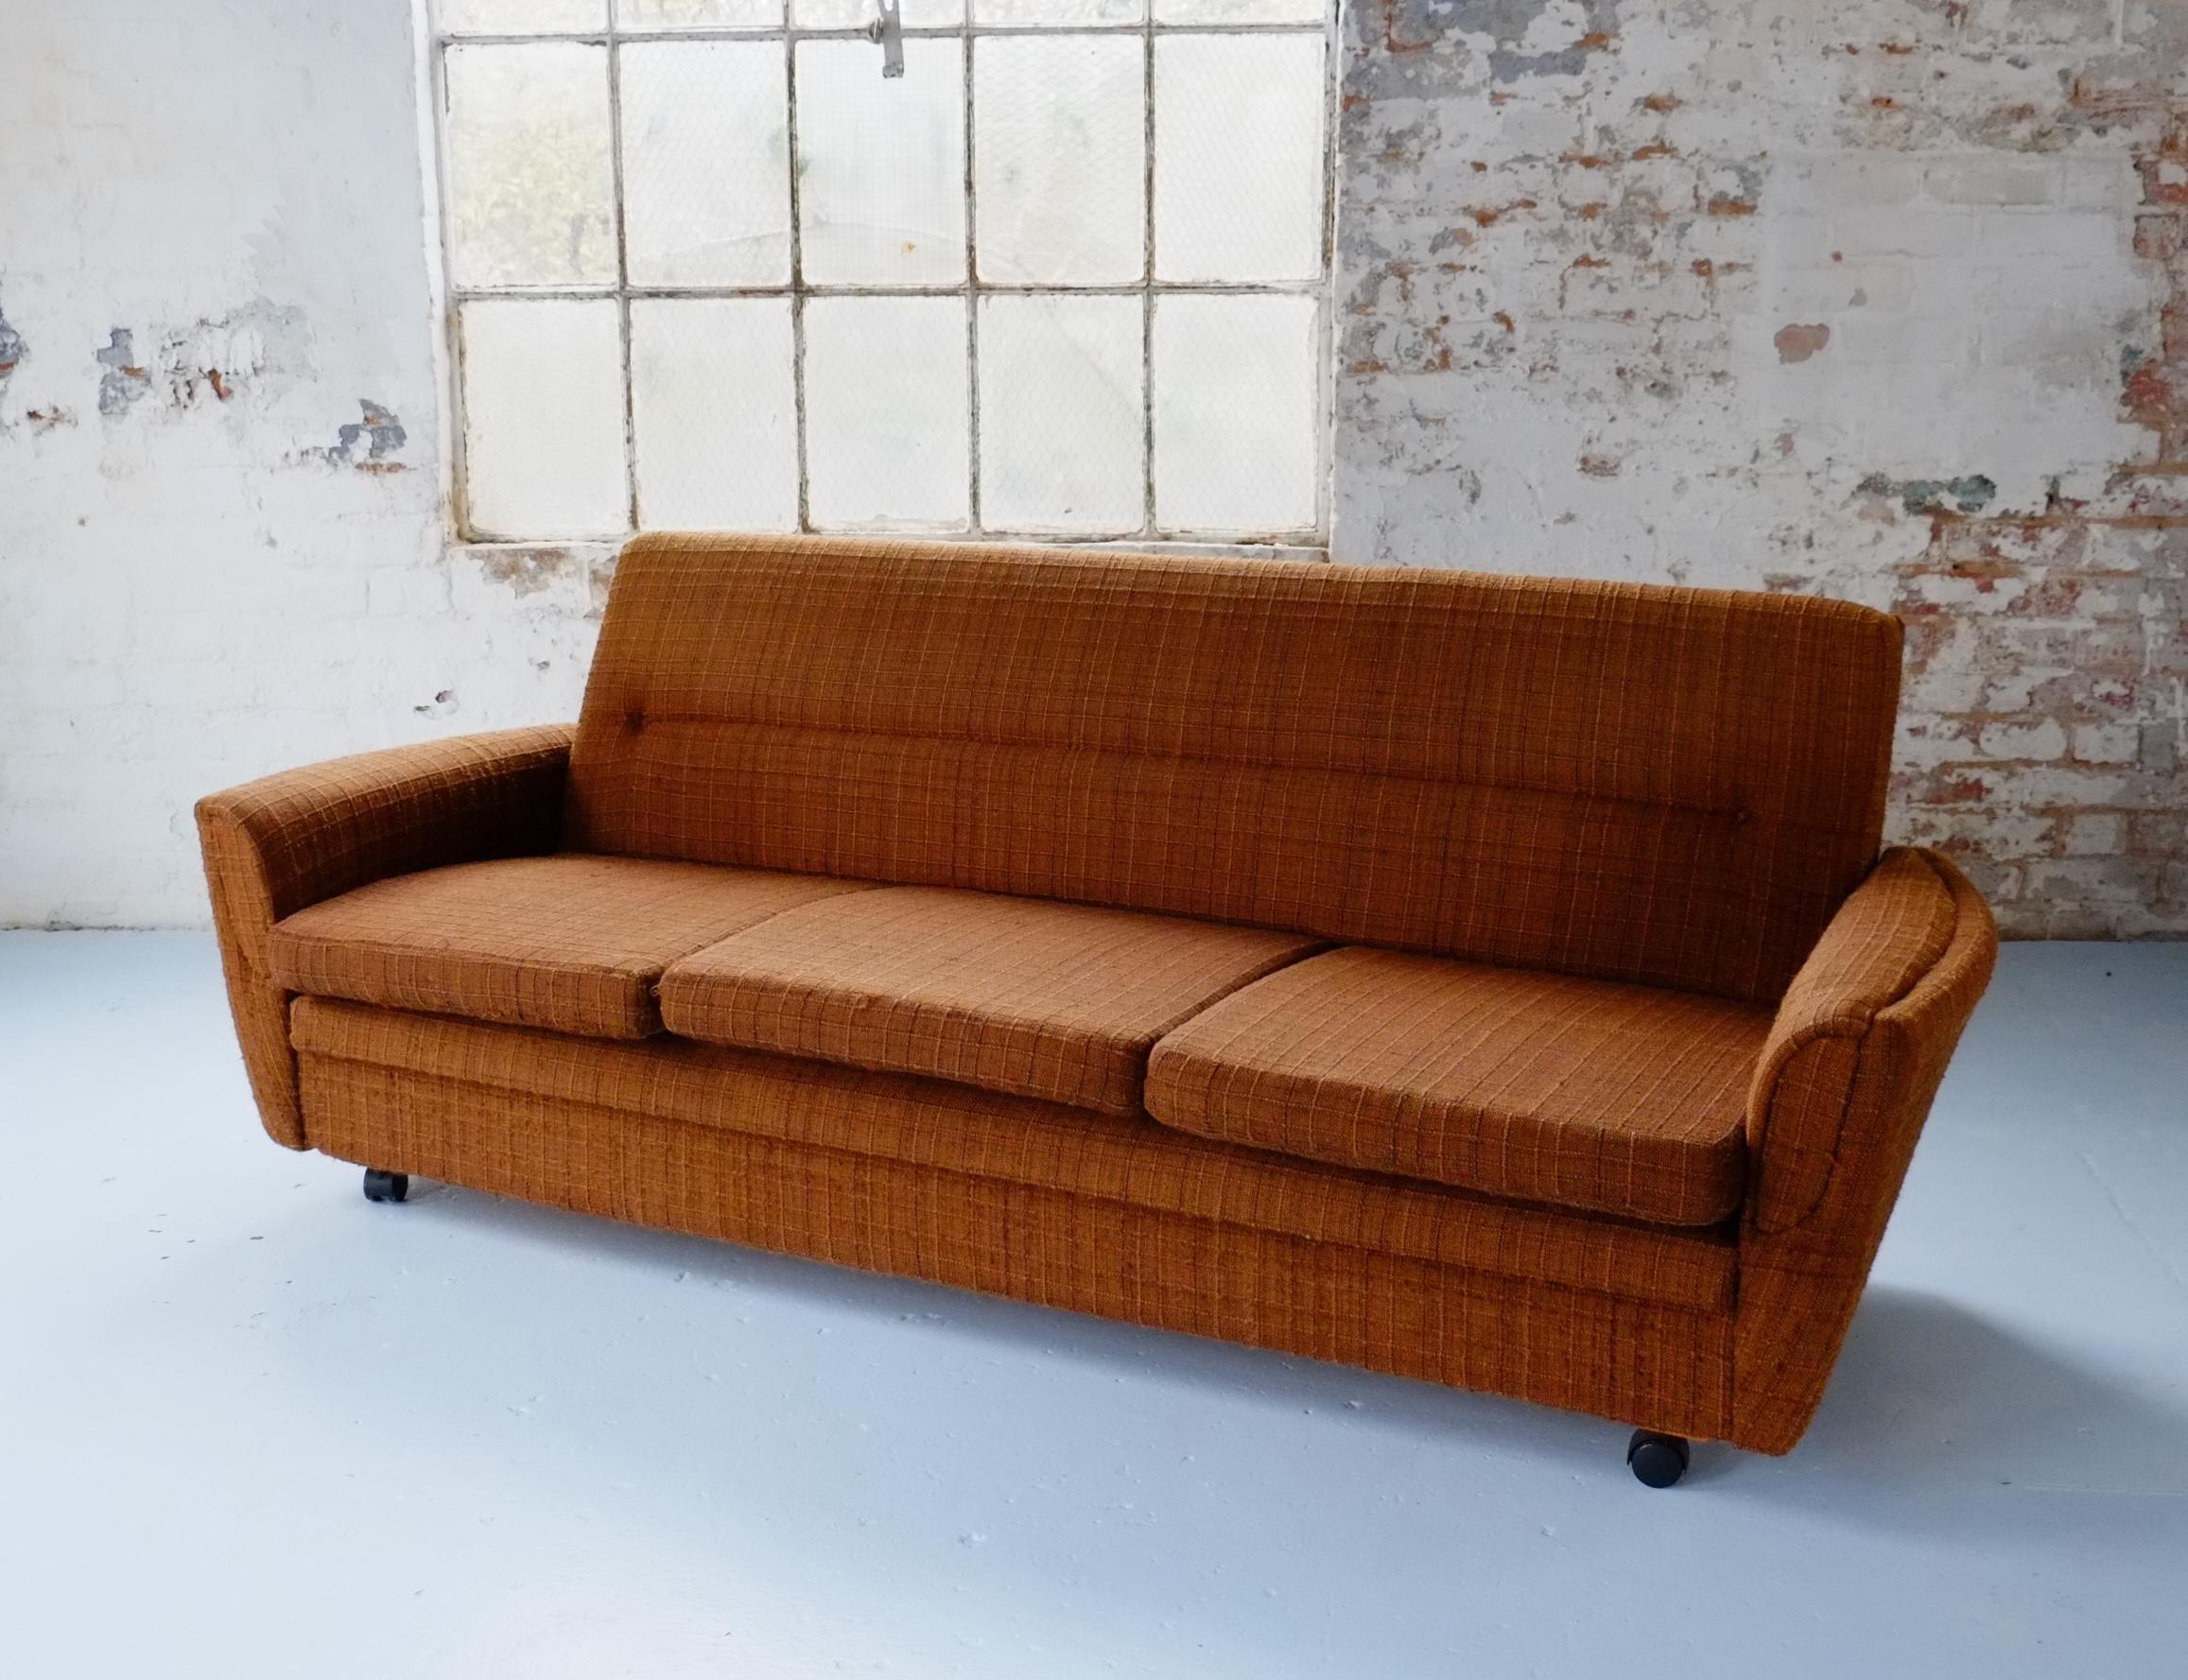 Classic 70's Vintage British Brown Sofa Bed Settee on Castors 8